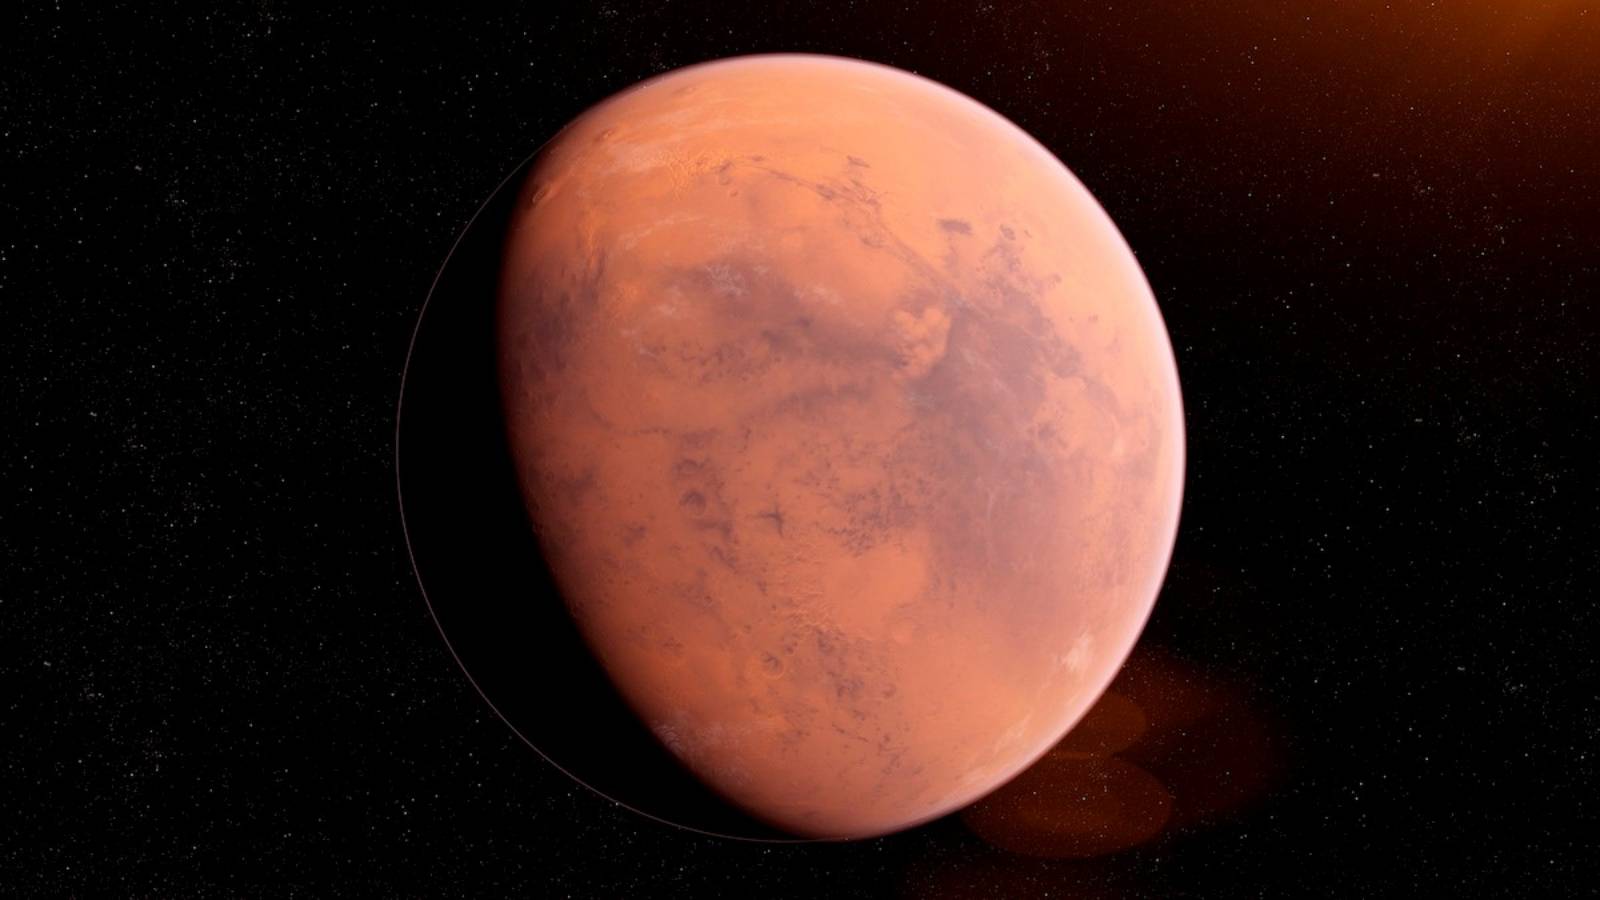 Il pianeta Marte Phobos